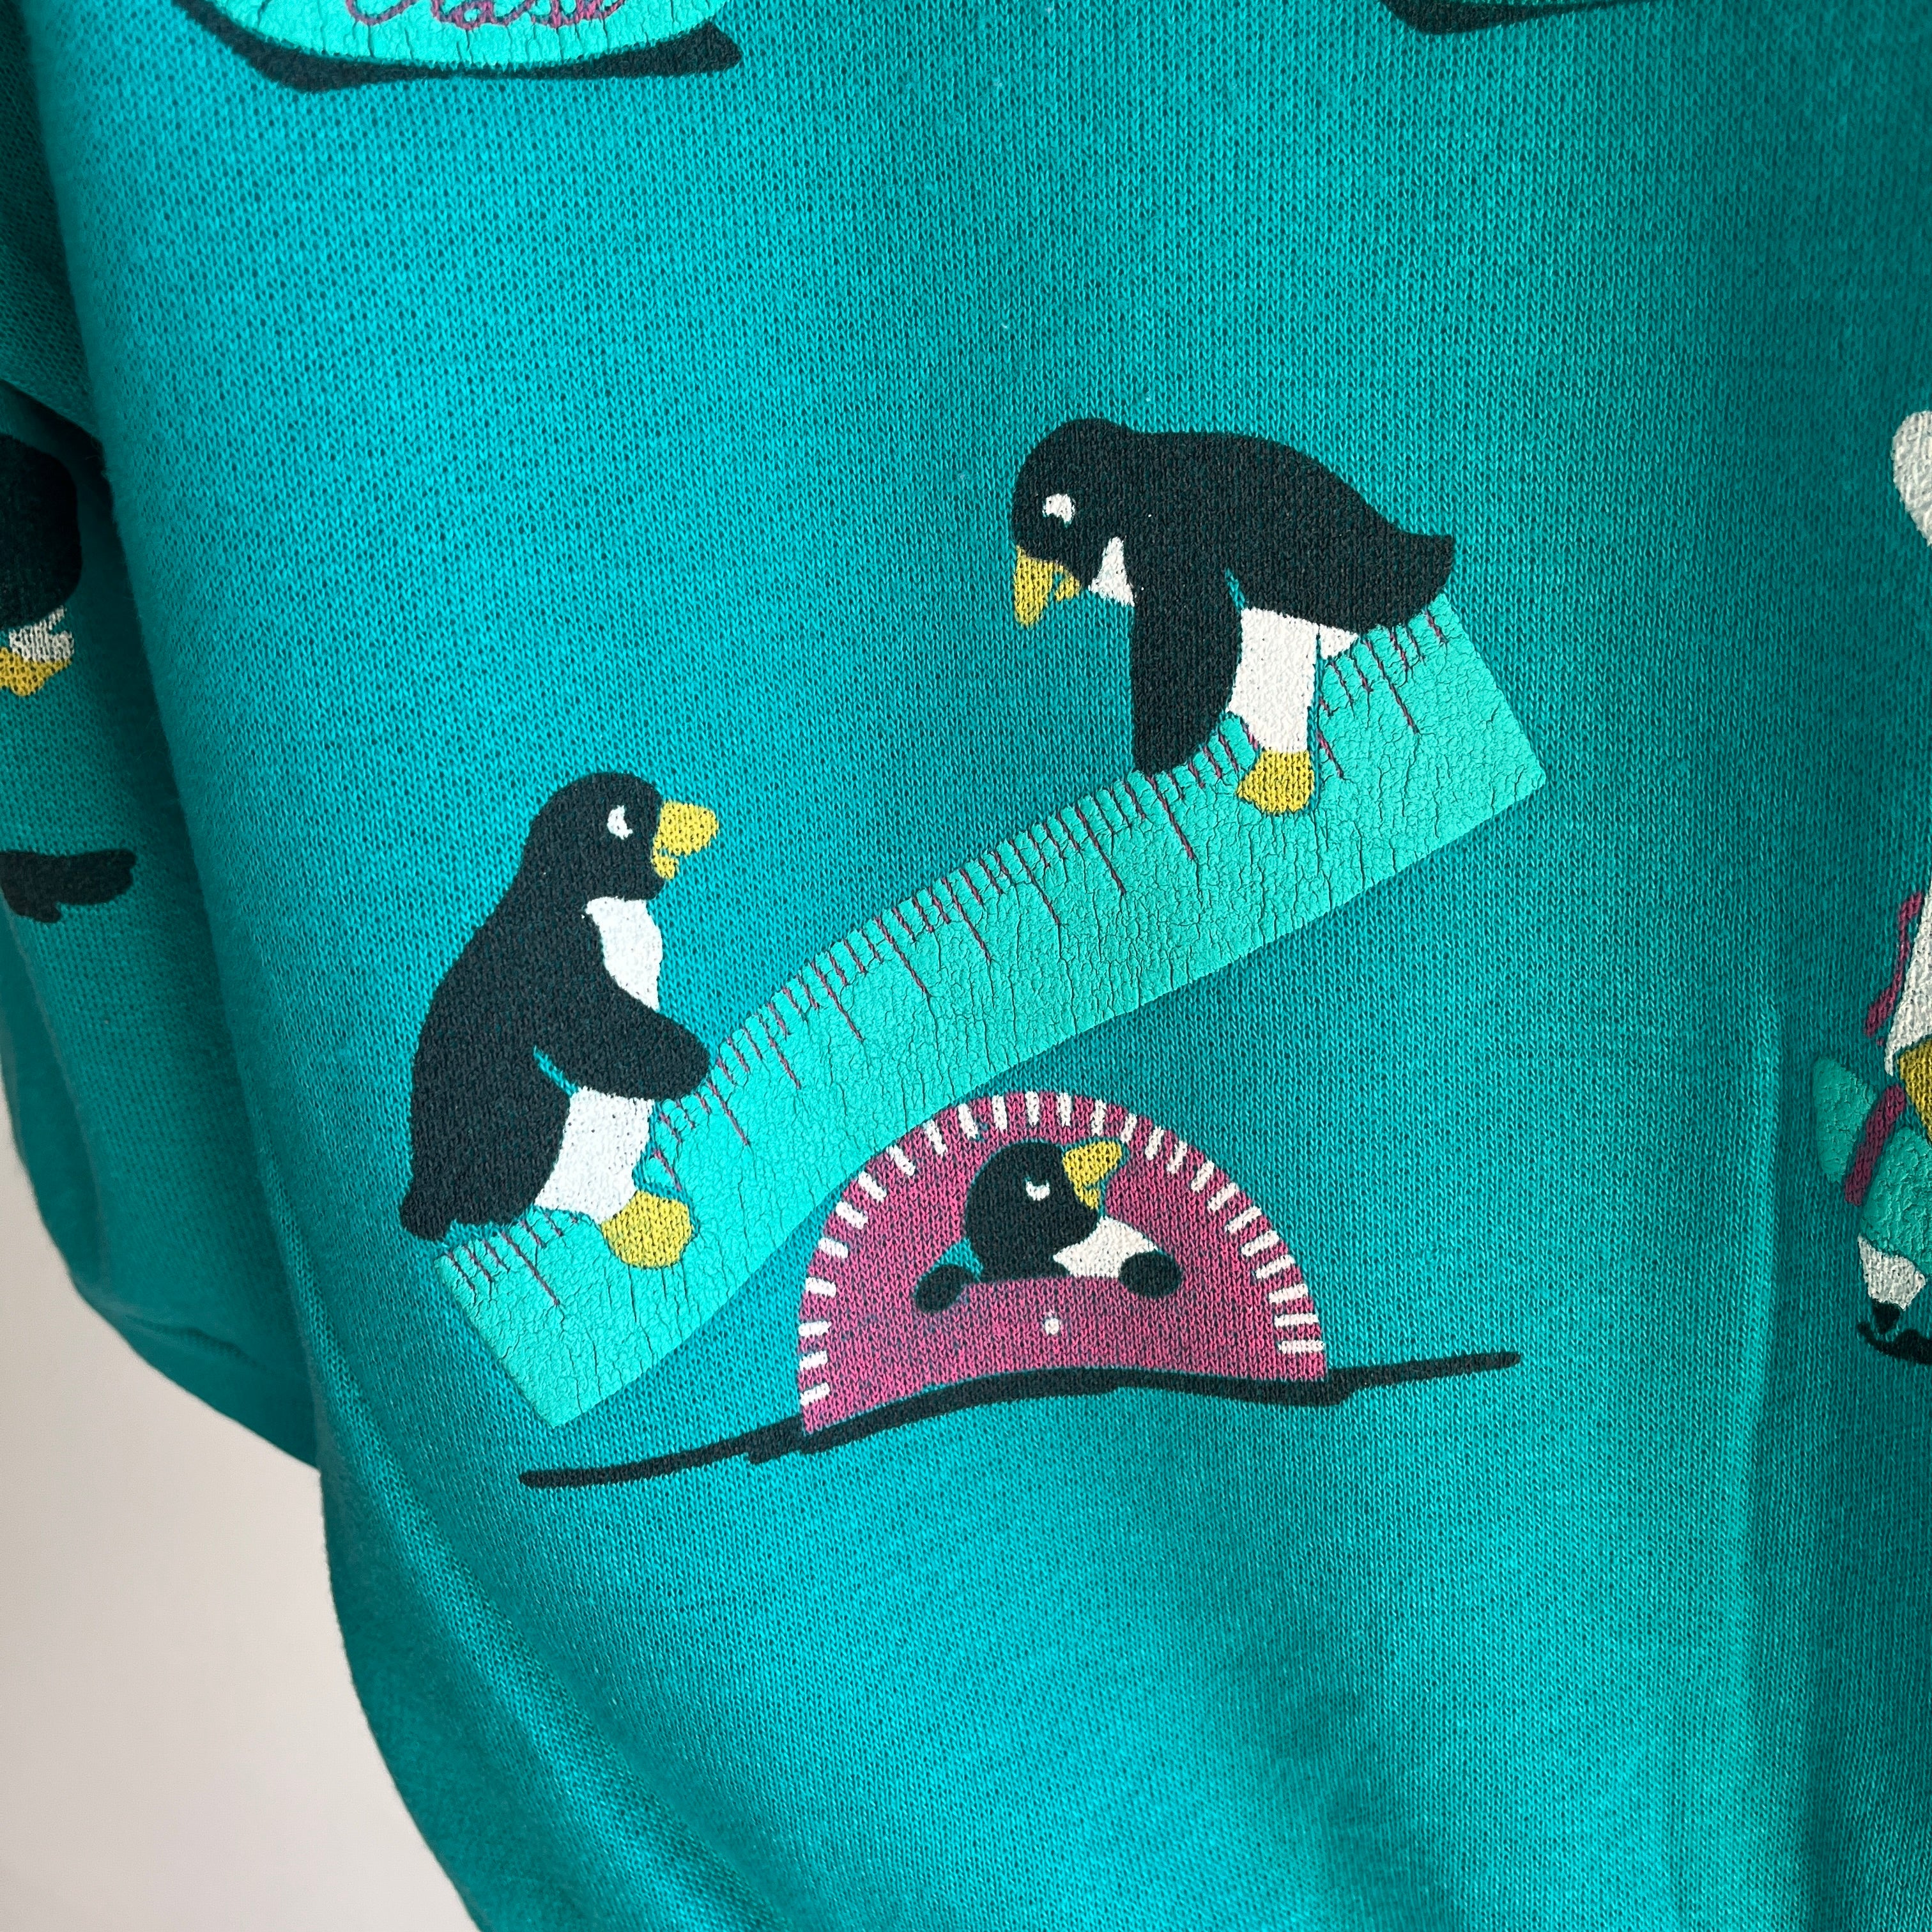 1980s Penguins Doing Math Homework Sweatshirt - Casual Greatness